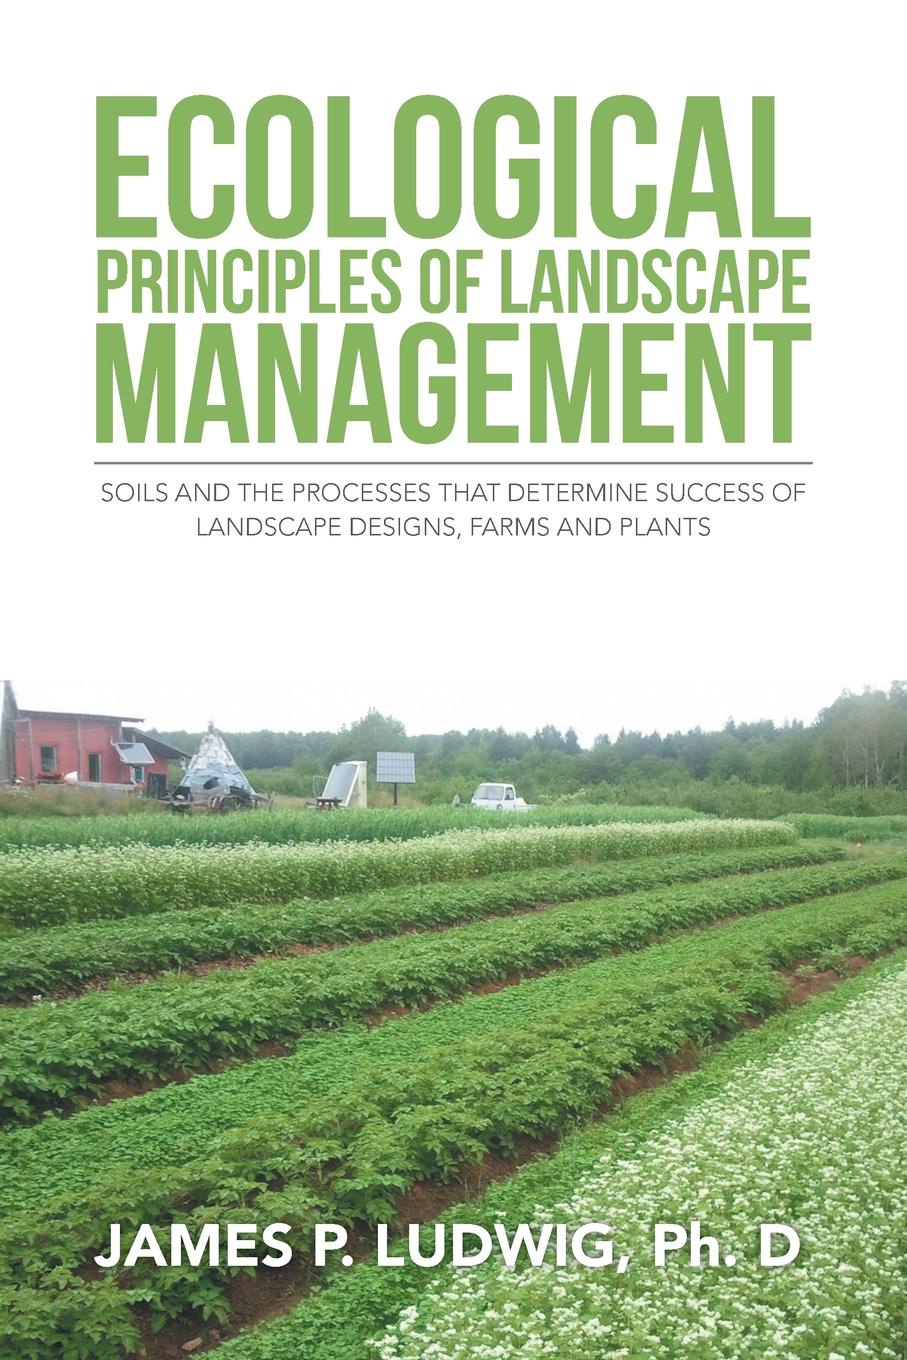 Ecological Principles of Landscape Management. Soils and the processes that determine success of landscape designs, farms and plants